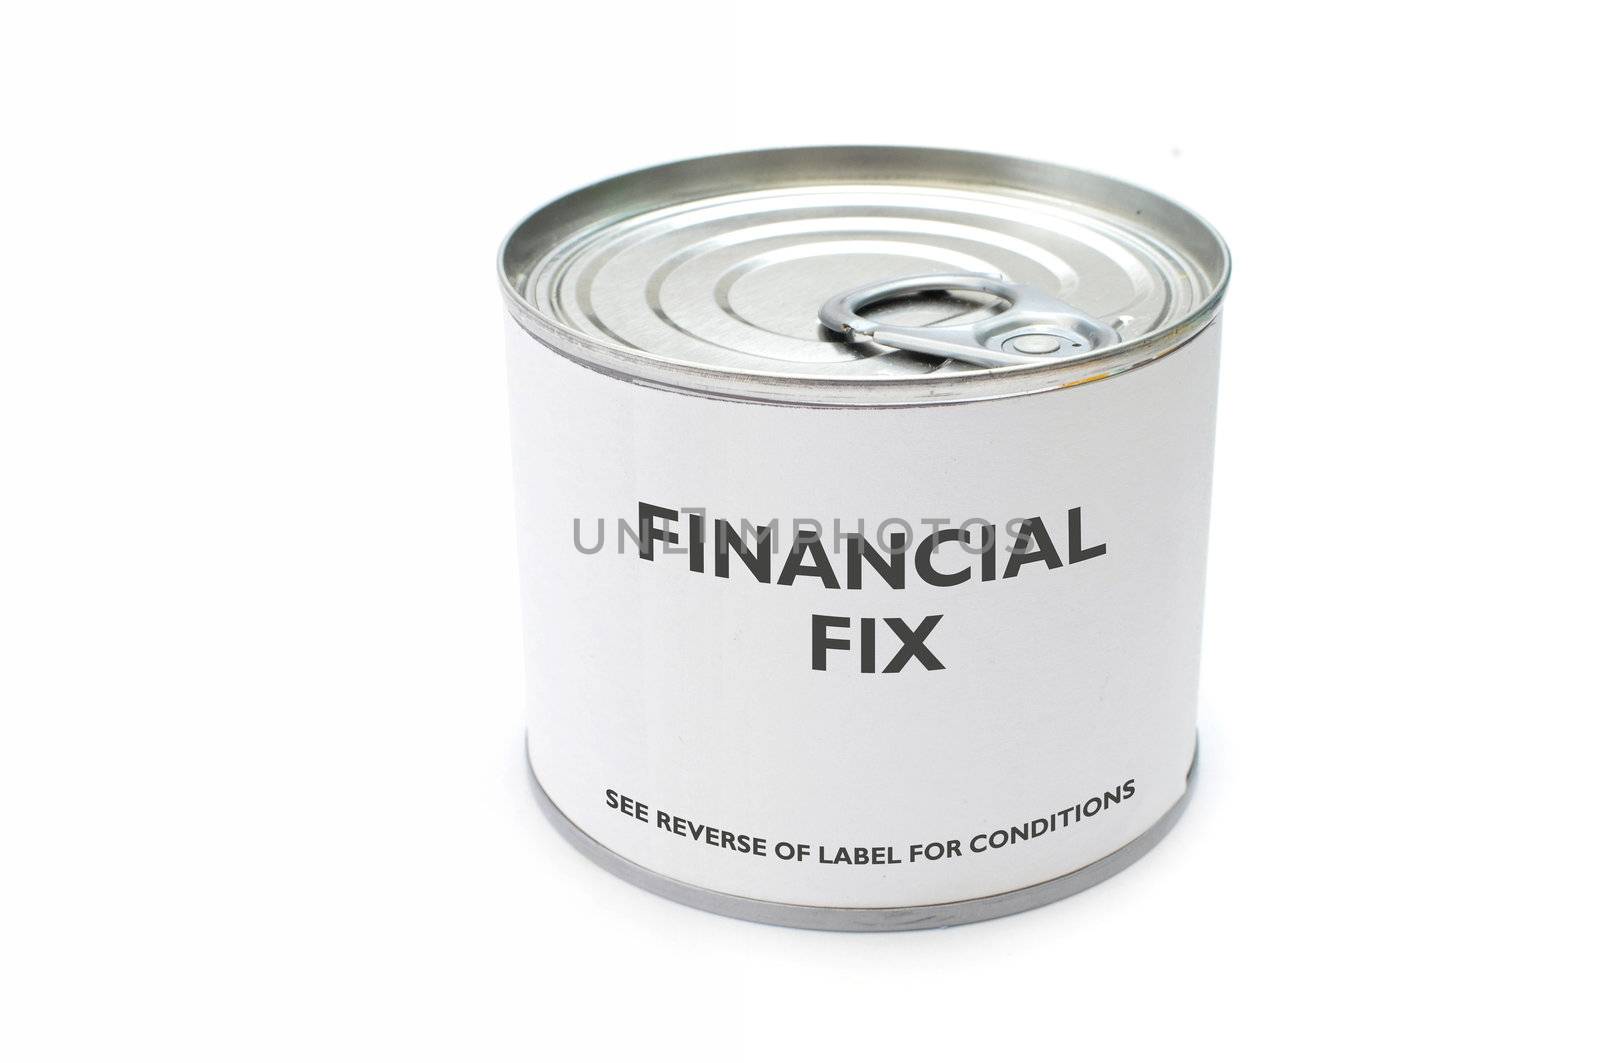 Financial fix  by unikpix